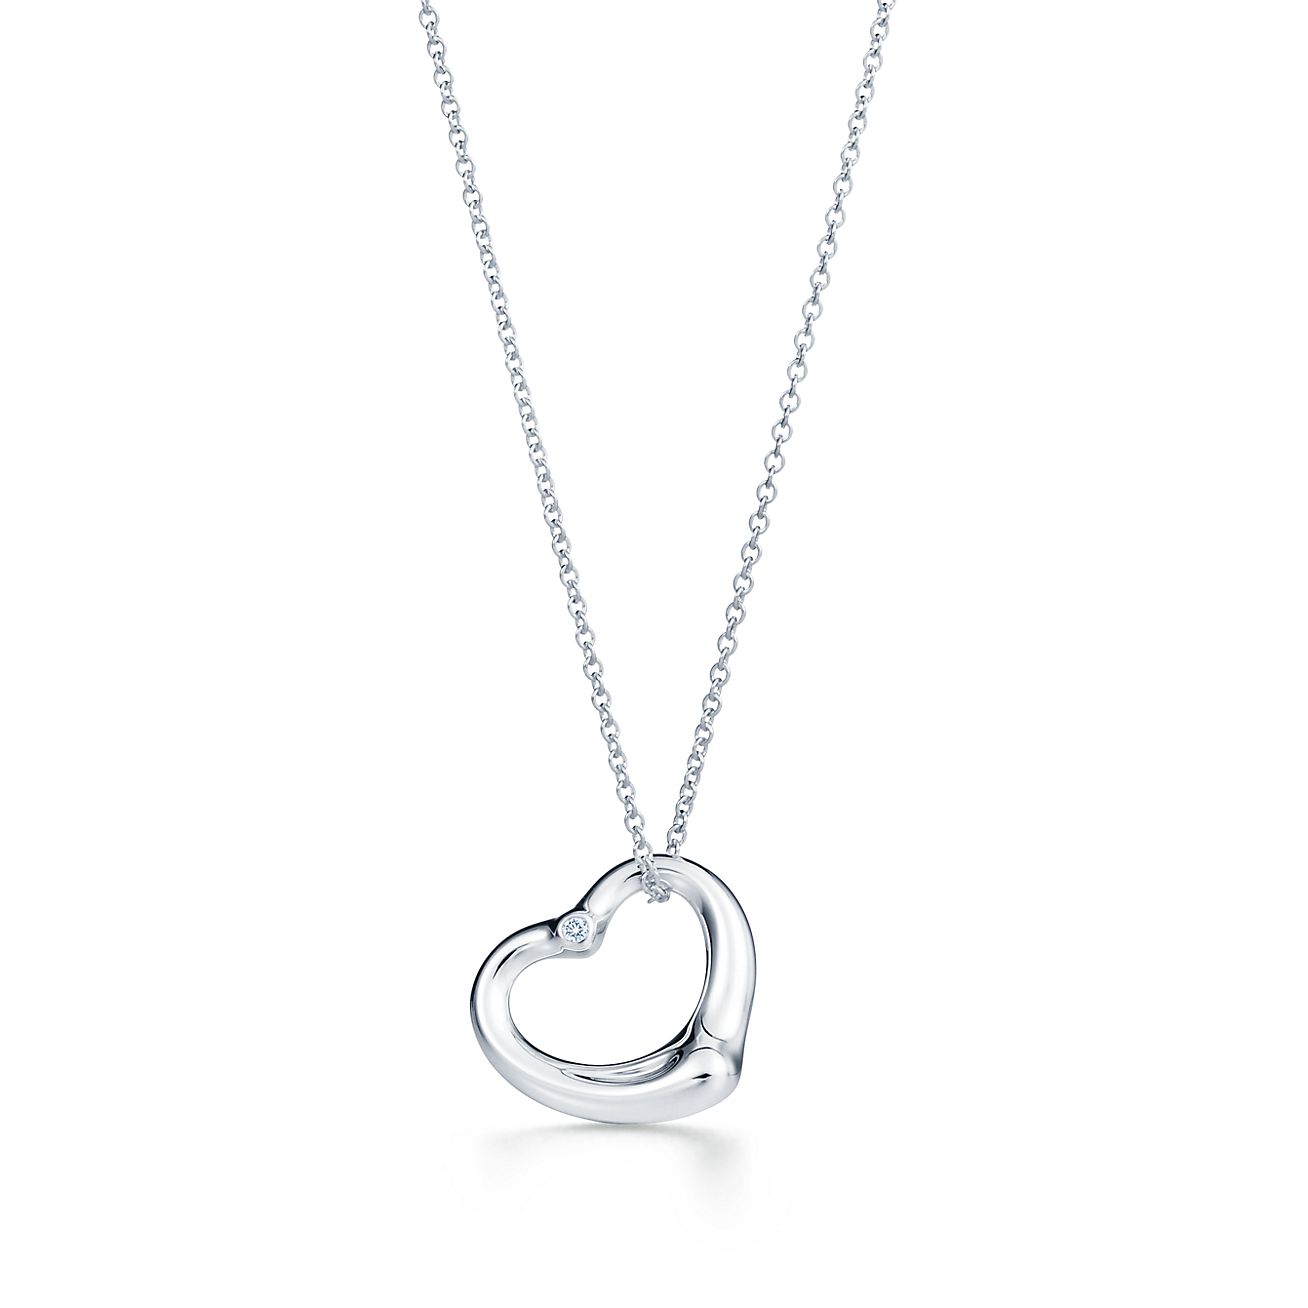 Tiffany Heart Necklaces